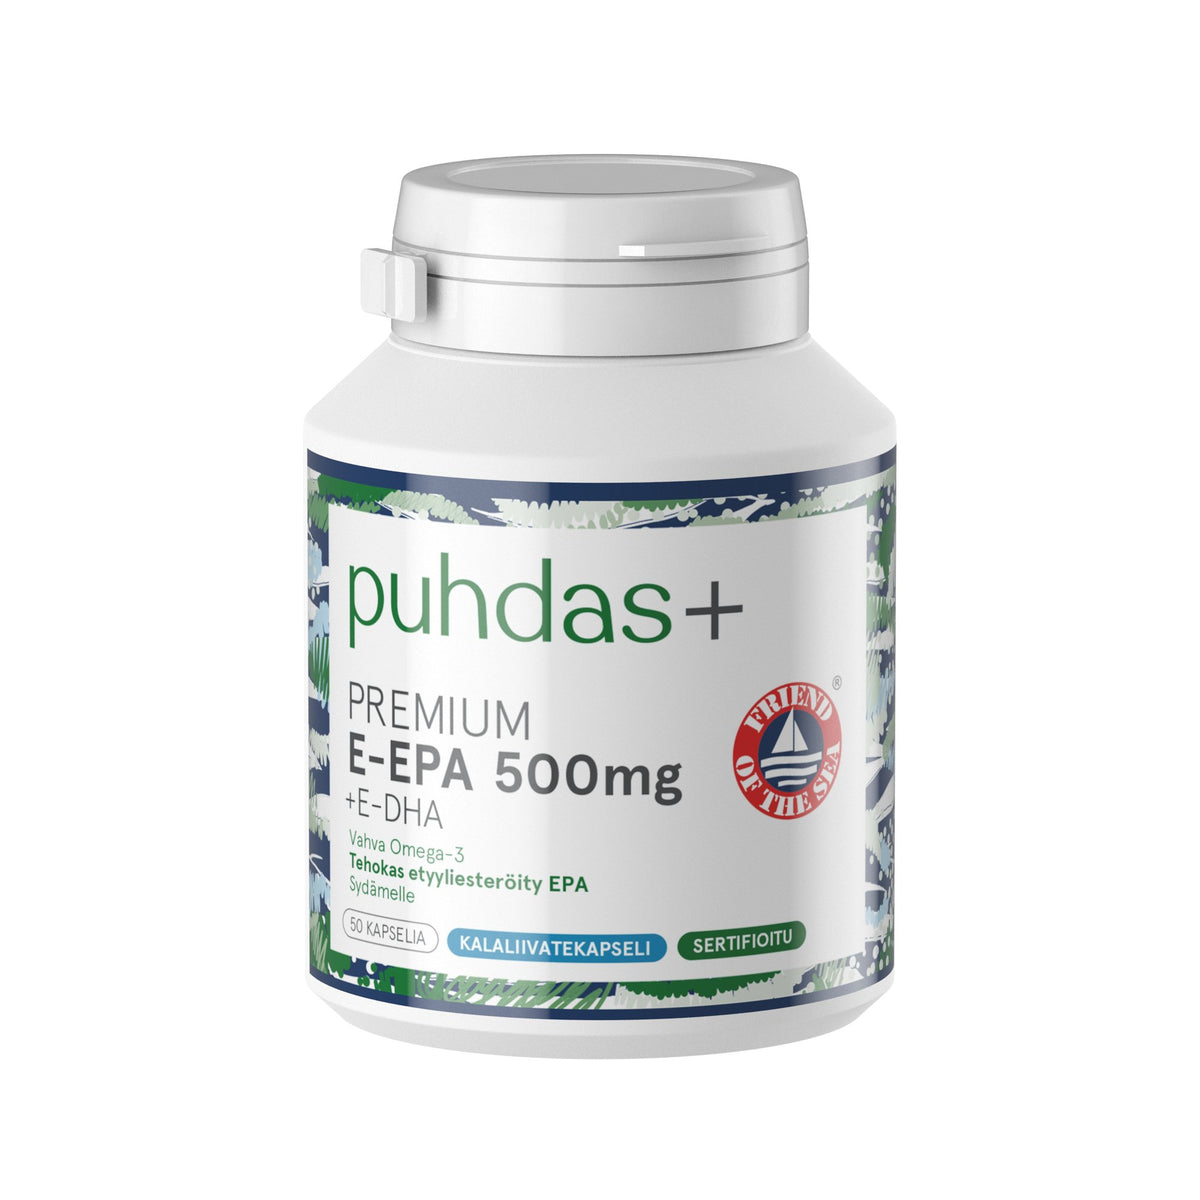 Puhdas+ Puhdas+ Premium E-EPA 500 mg + E-DHA Vahva Omega-3, 50 kaps Päiväysale!.